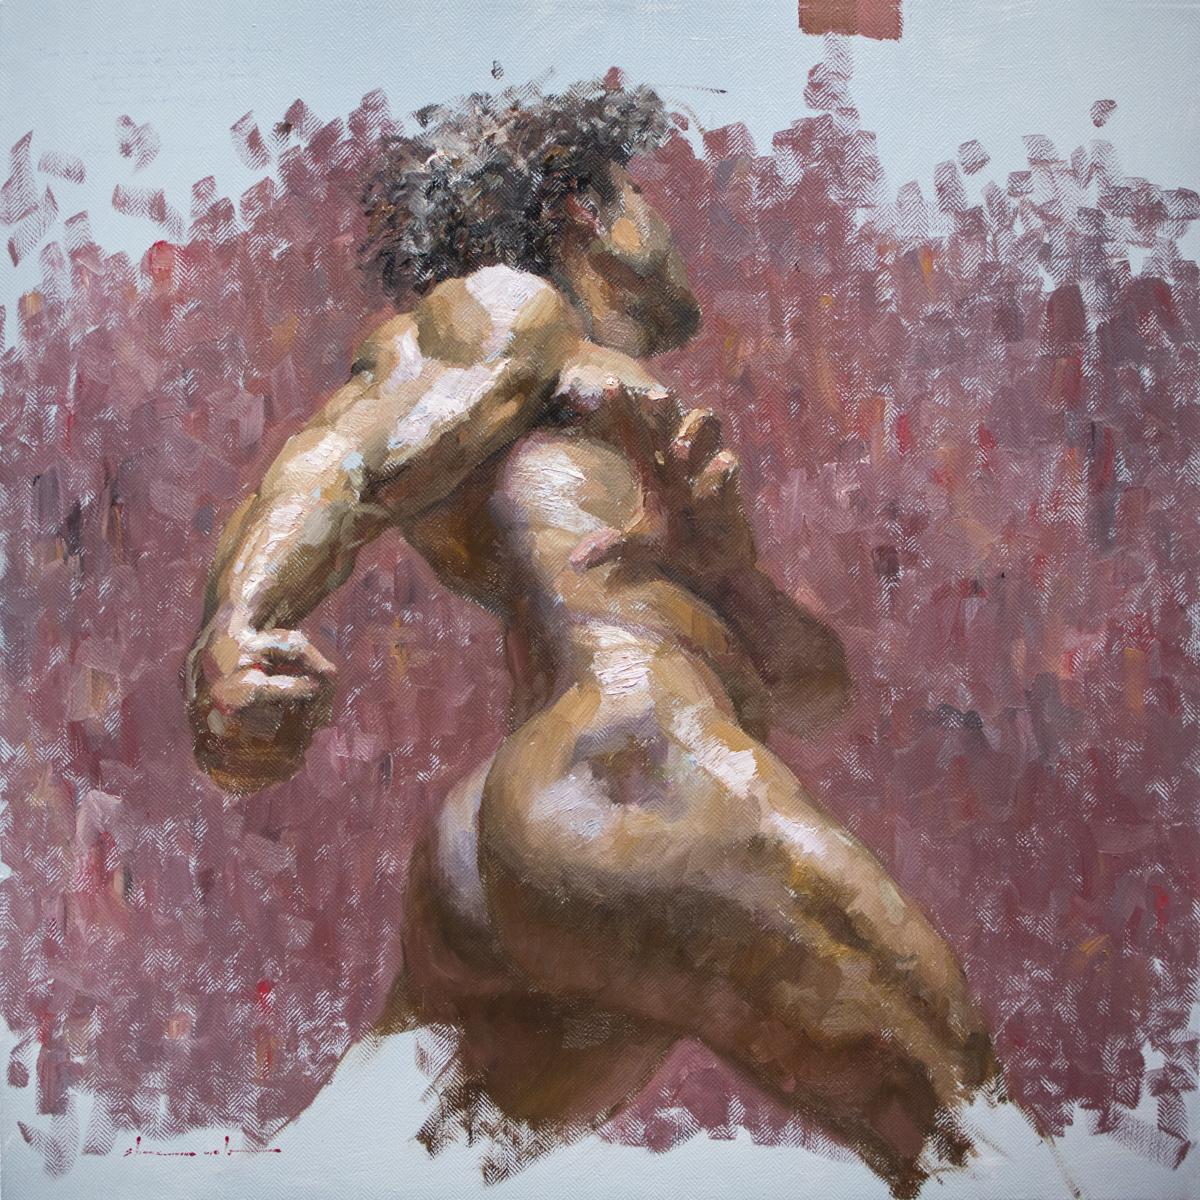 Shane Wolf Figurative Painting - Titan, étude alla prima